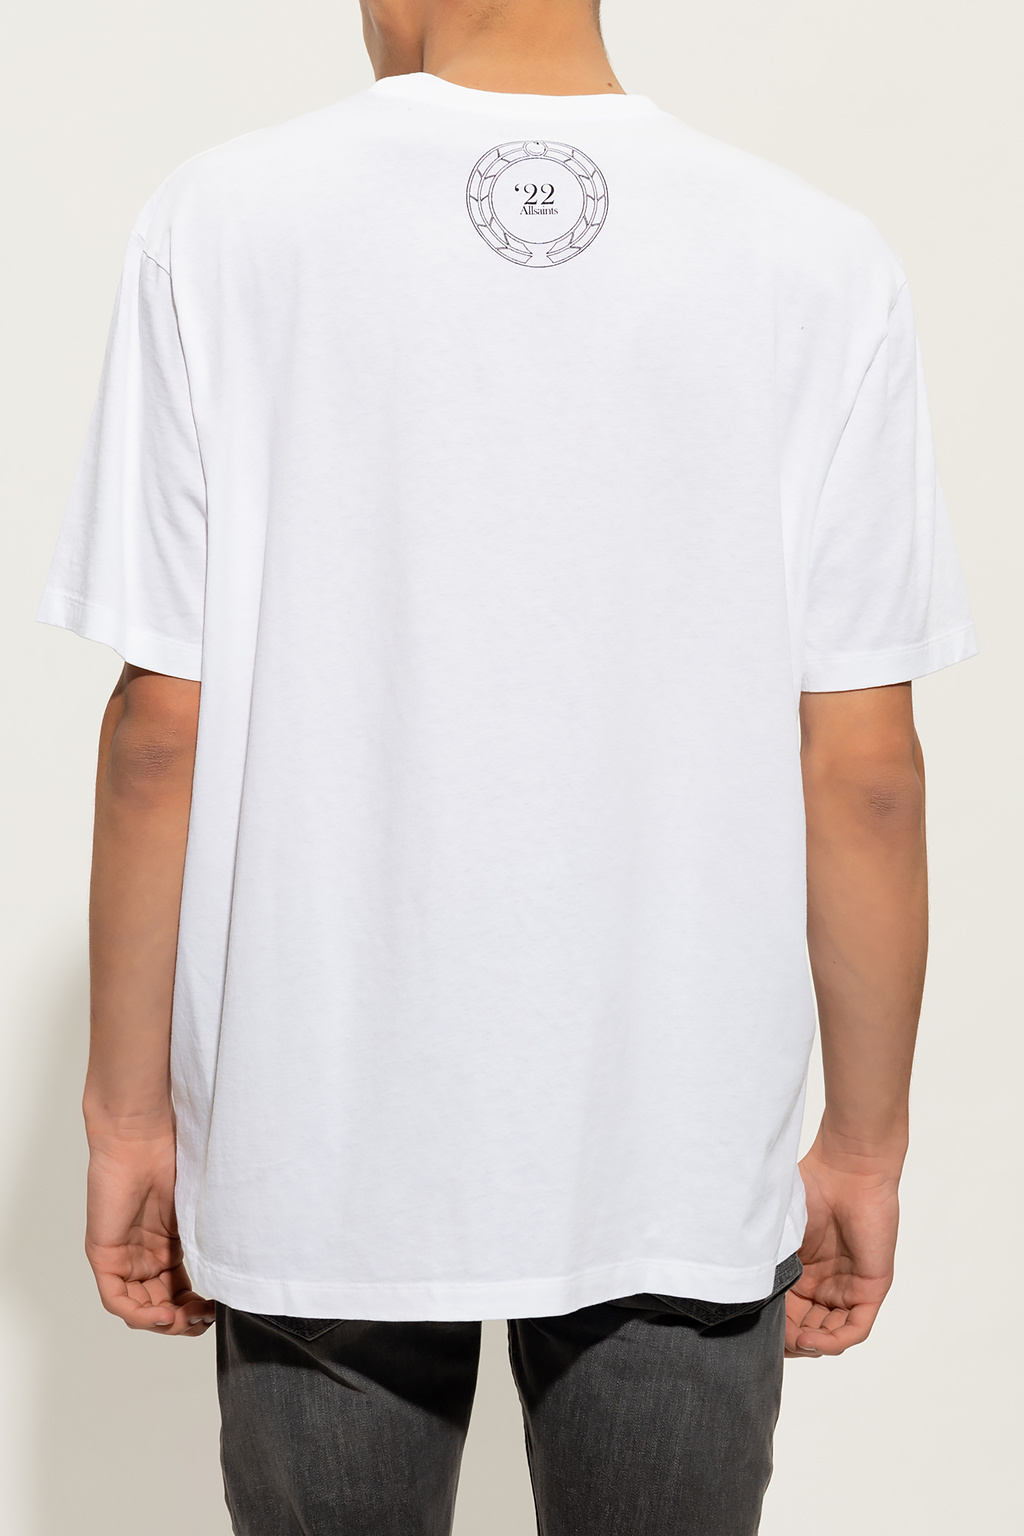 AllSaints ‘Pravha’ T-shirt